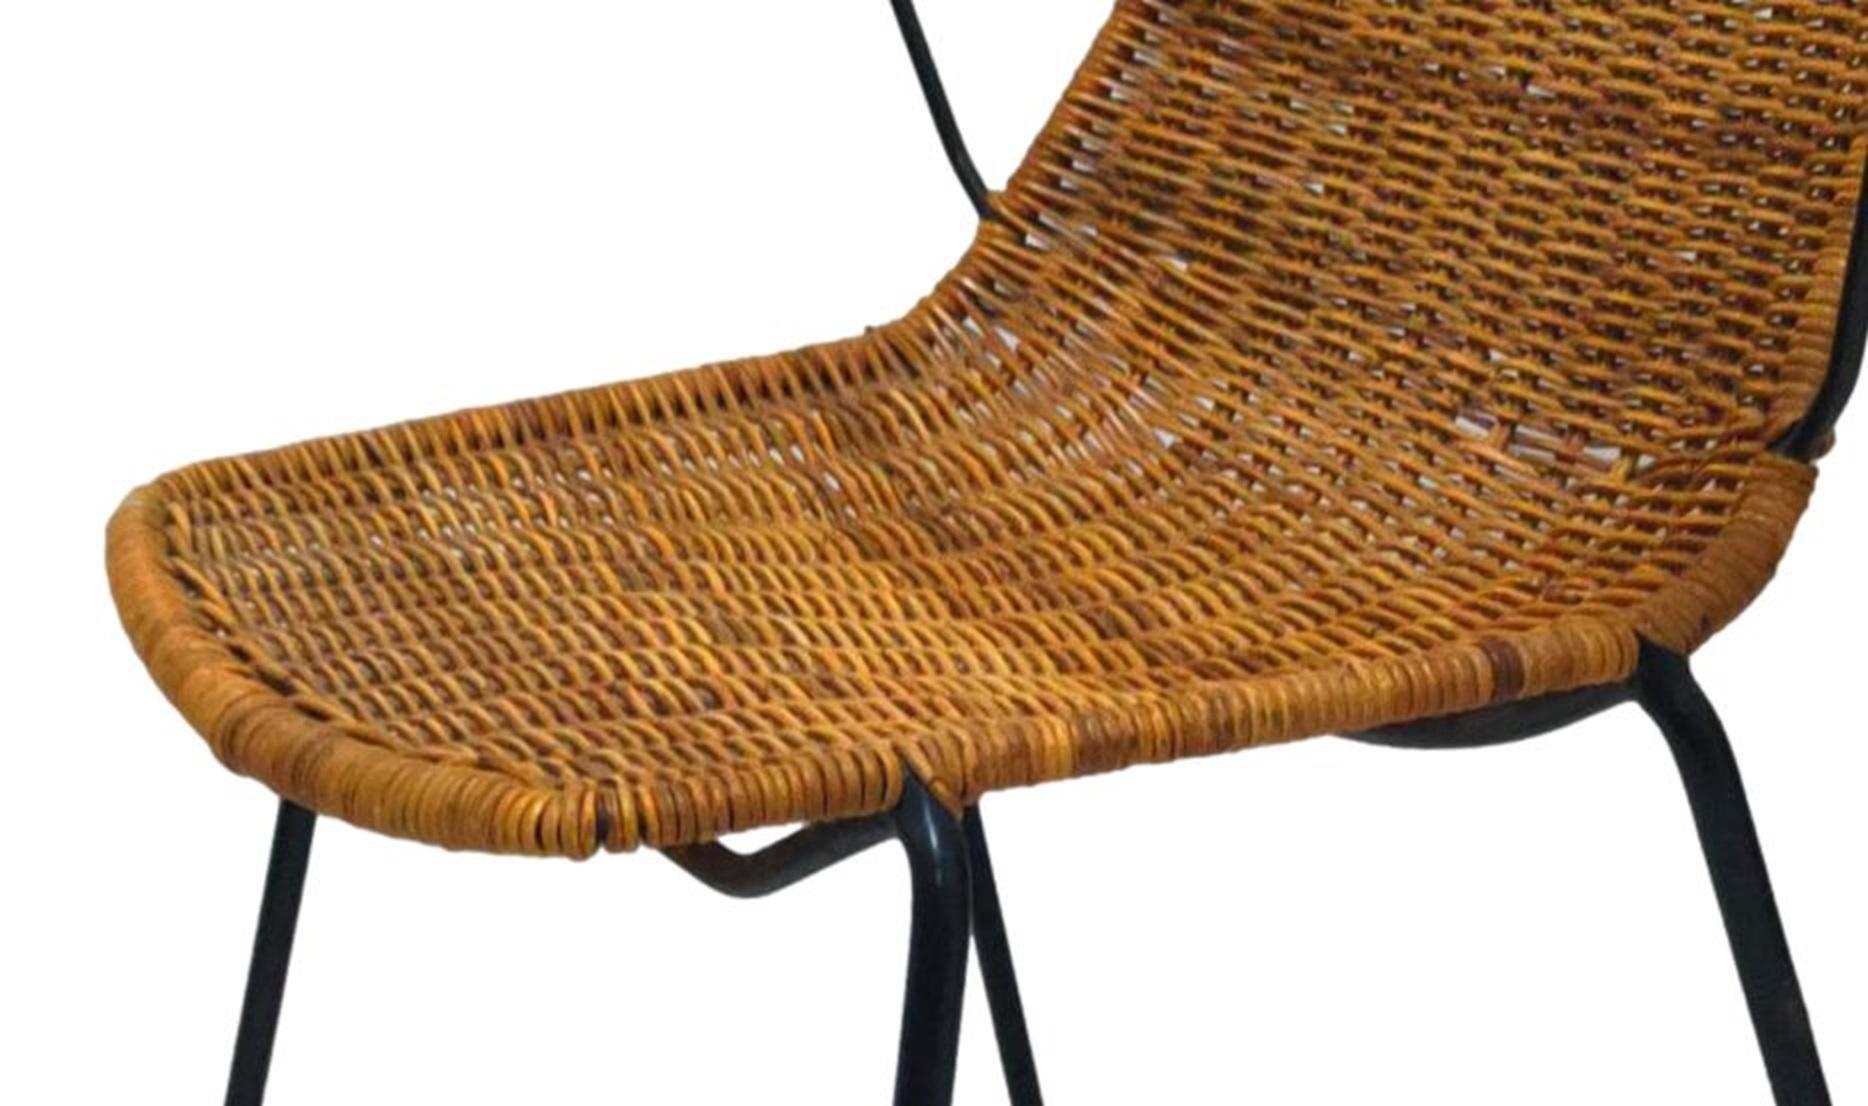 Metal basket chair in wicker 1950s design franco campo & carlo graffi